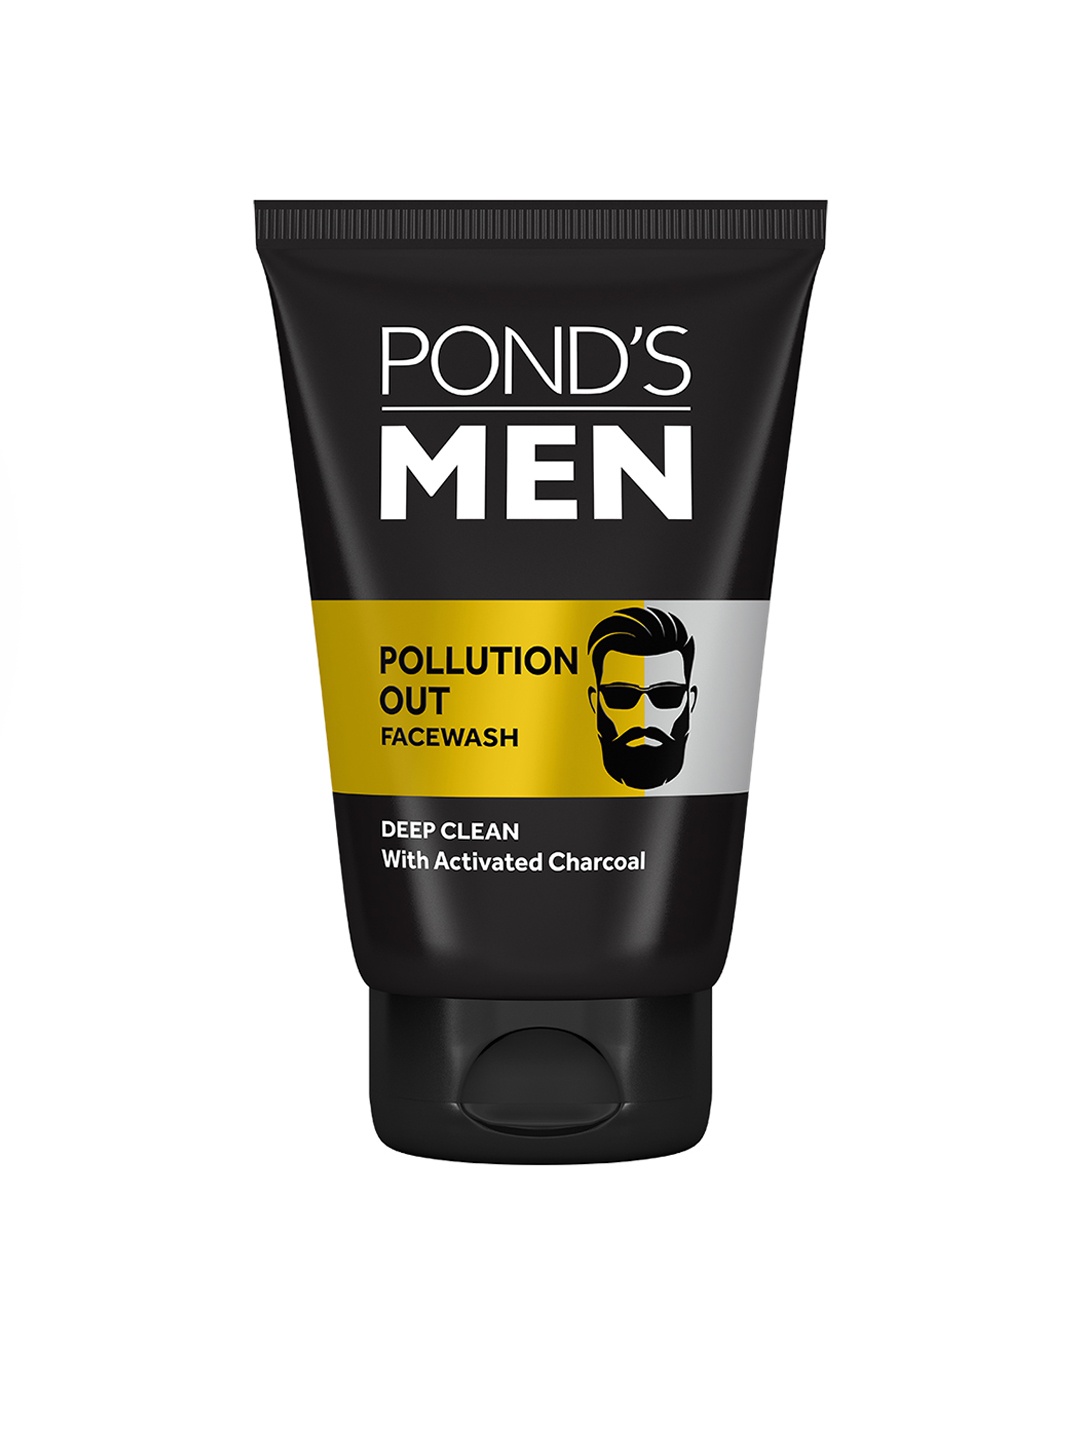 

Pond's Men Pollution Out Deep Clean Face Wash, Black